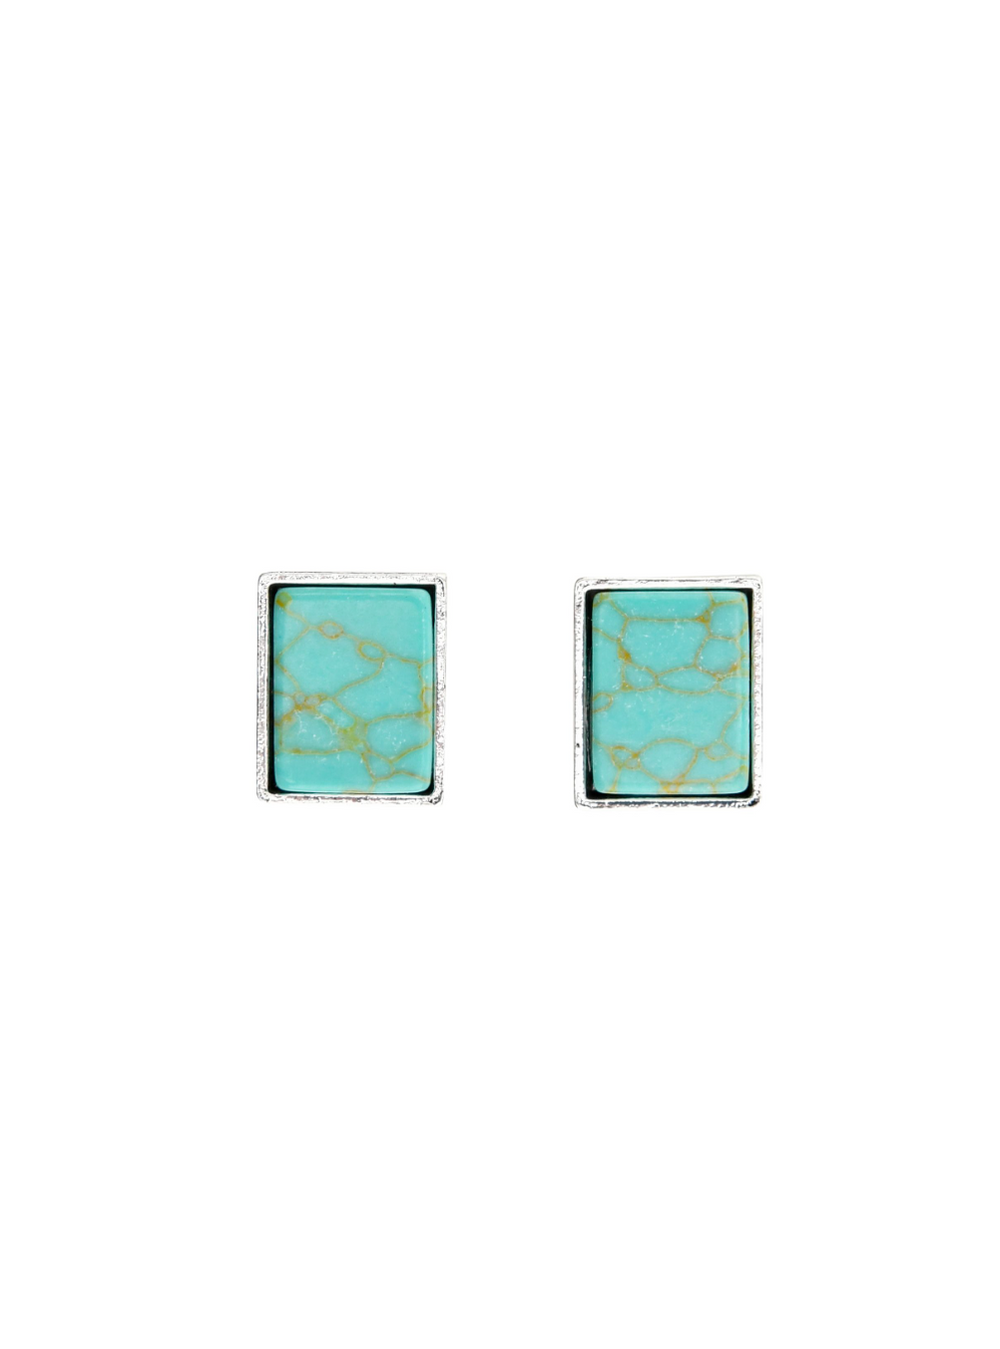 Silver Rectangular Turquoise Stud Earrings